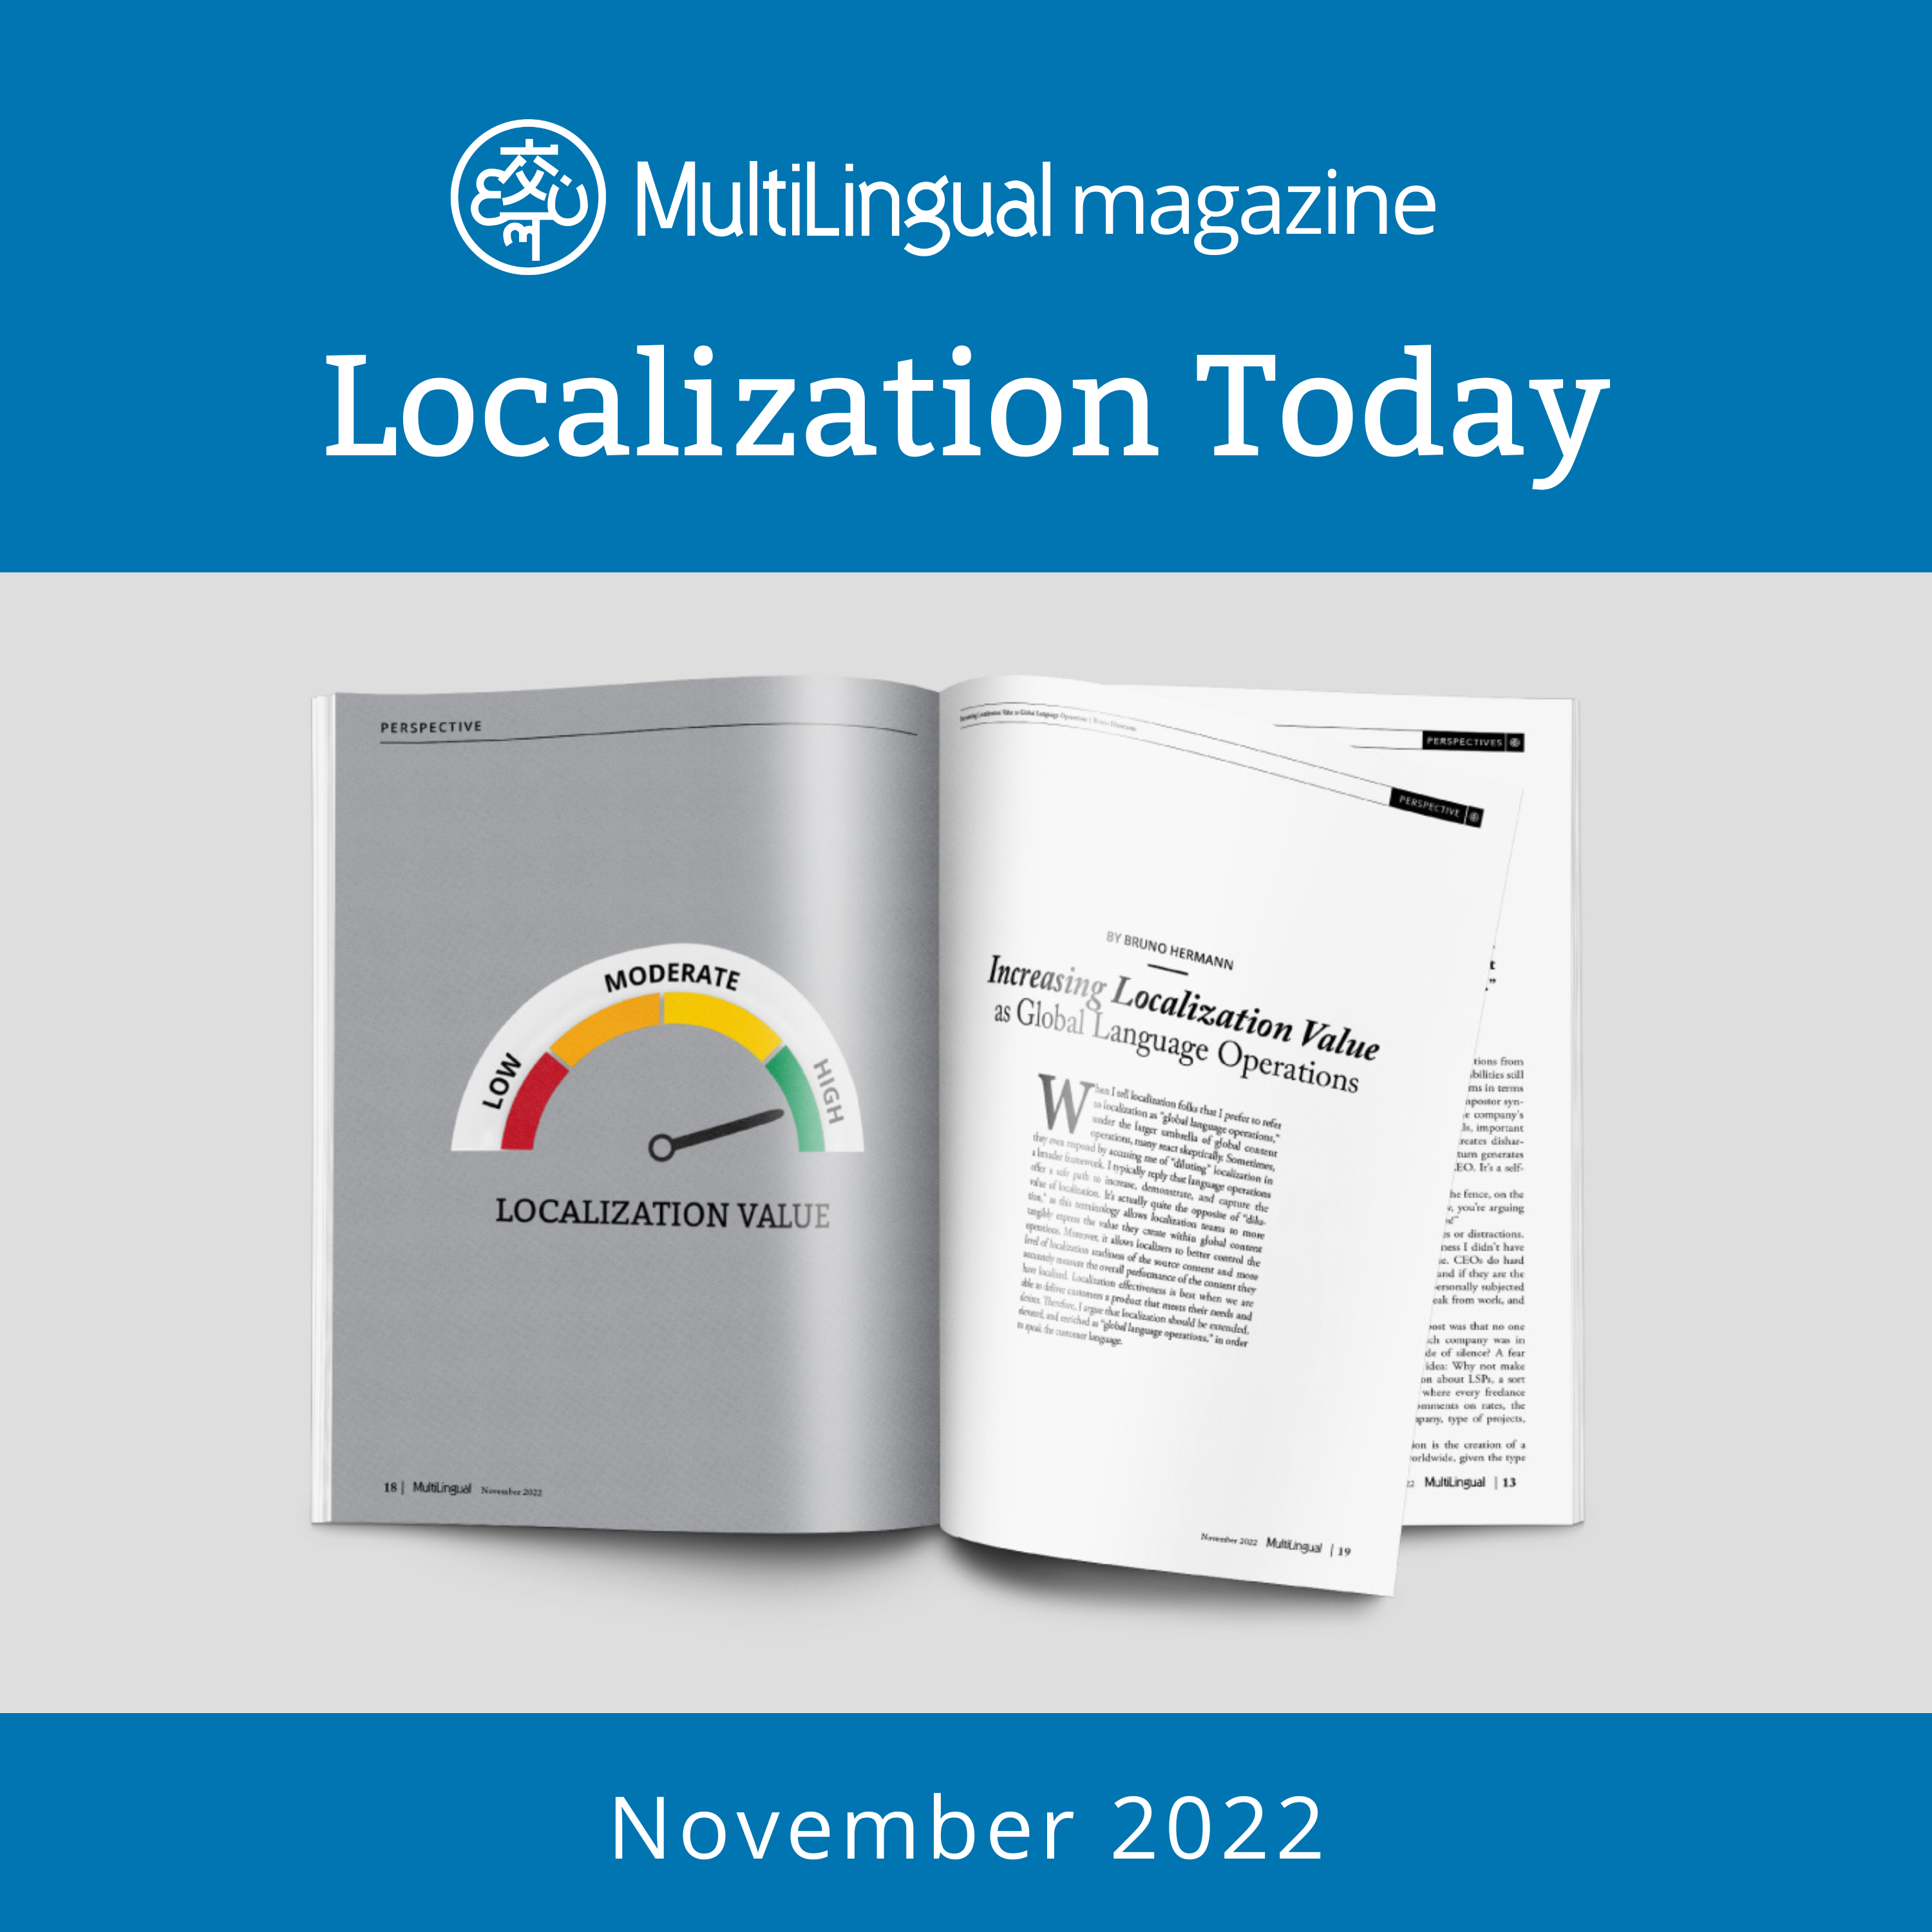 Increasing Localization Value as Global Language Operations | November 2022